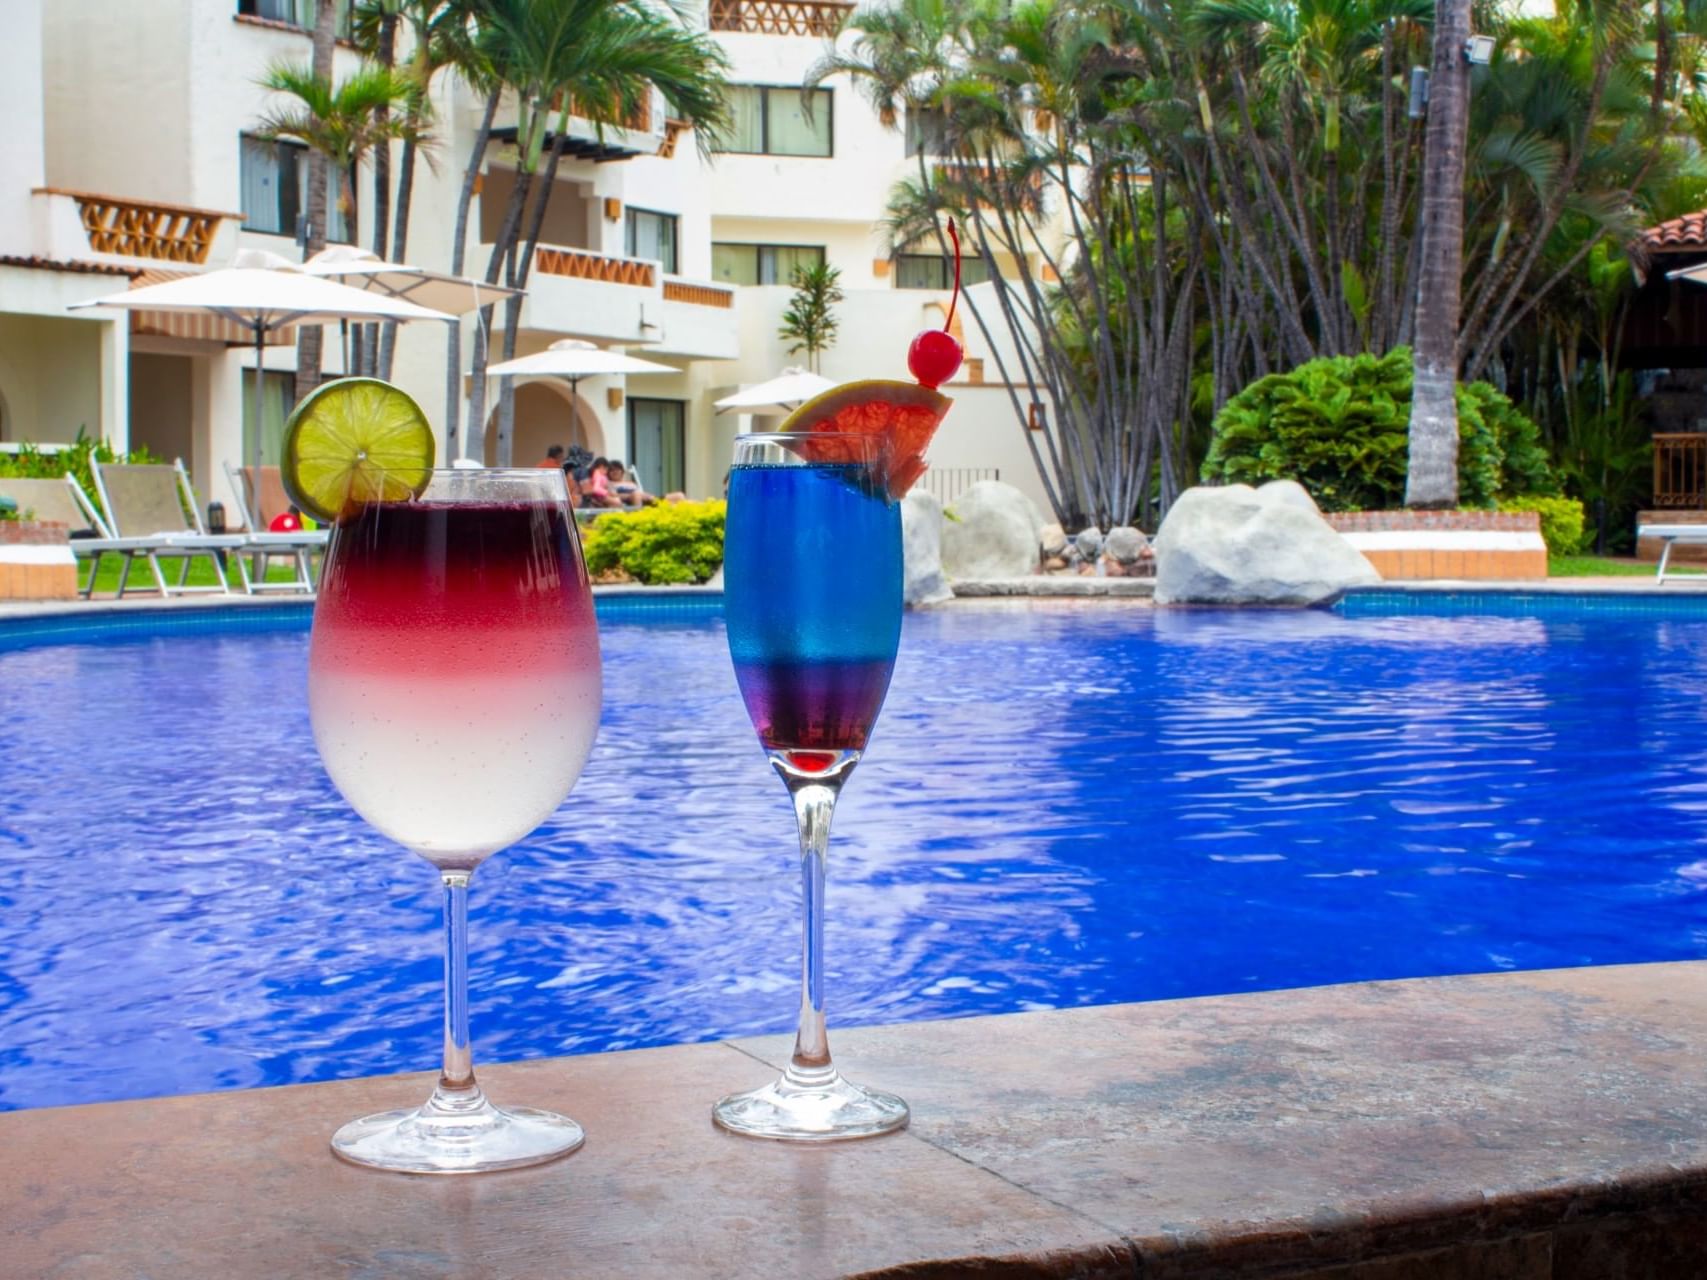 Cocktails served by the pool edge at Aqua Bar Calandria in Plaza Pelicanos Grand Beach Resort